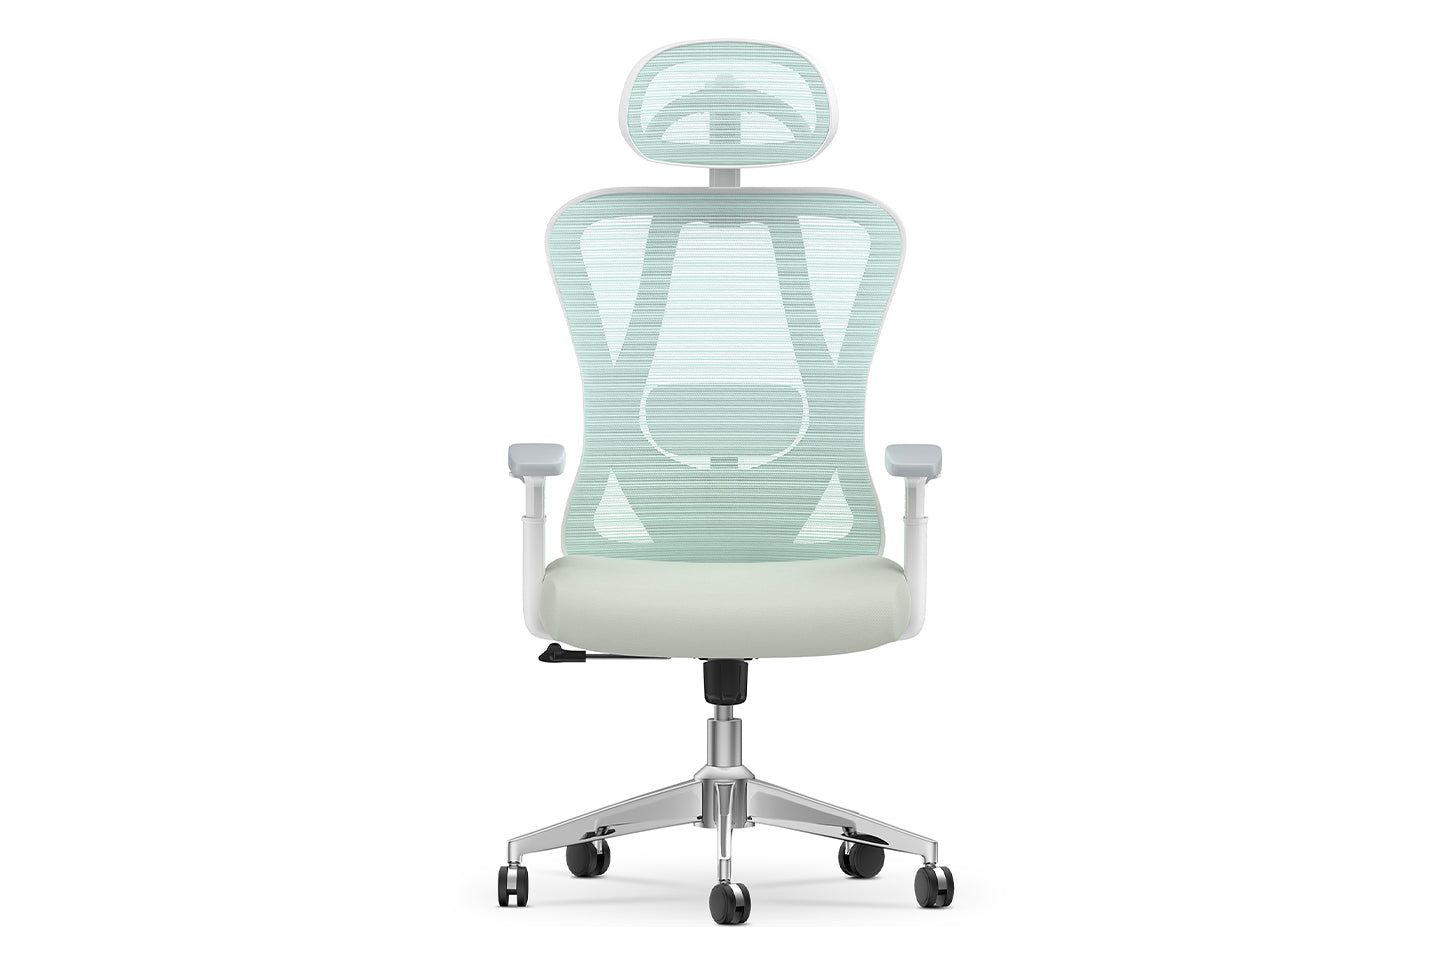 Ergonomic Mesh Office Chair High Back Home Office Desk Chair with Adjustable Headrest, Armrests, Lumbar Support Green